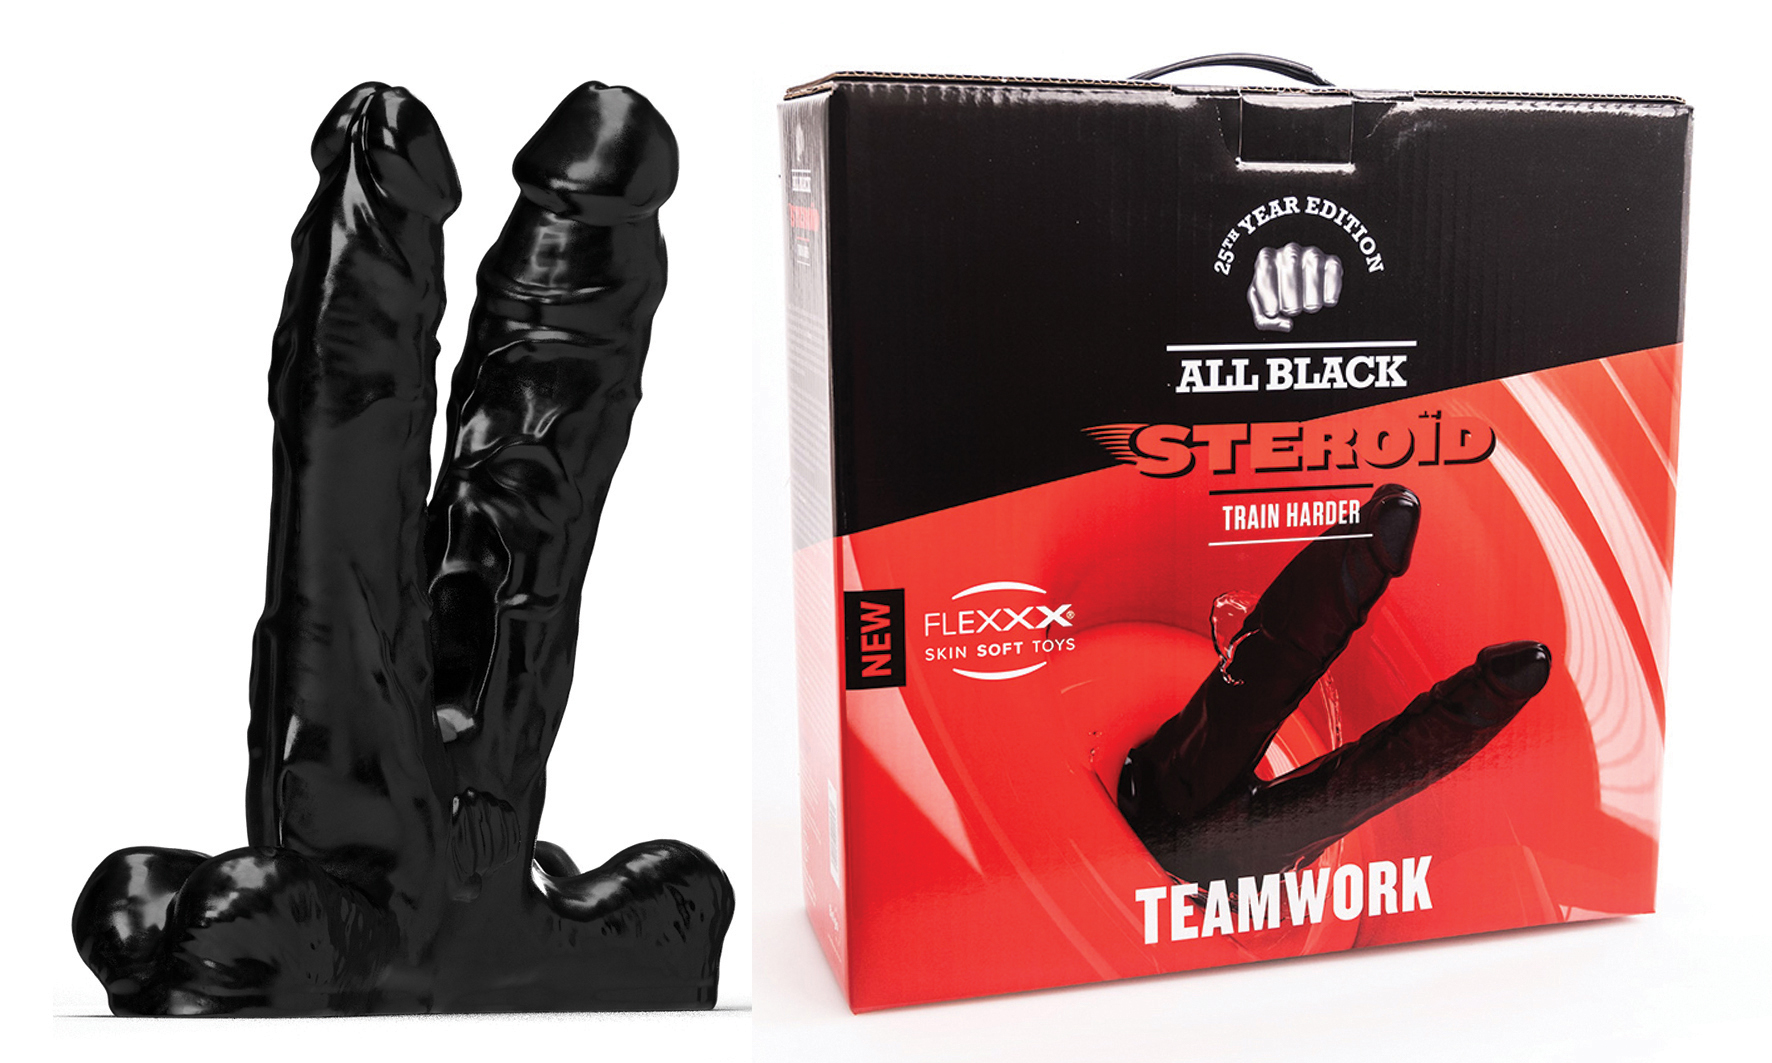 ALL BLACK STEROID Teamwork Black